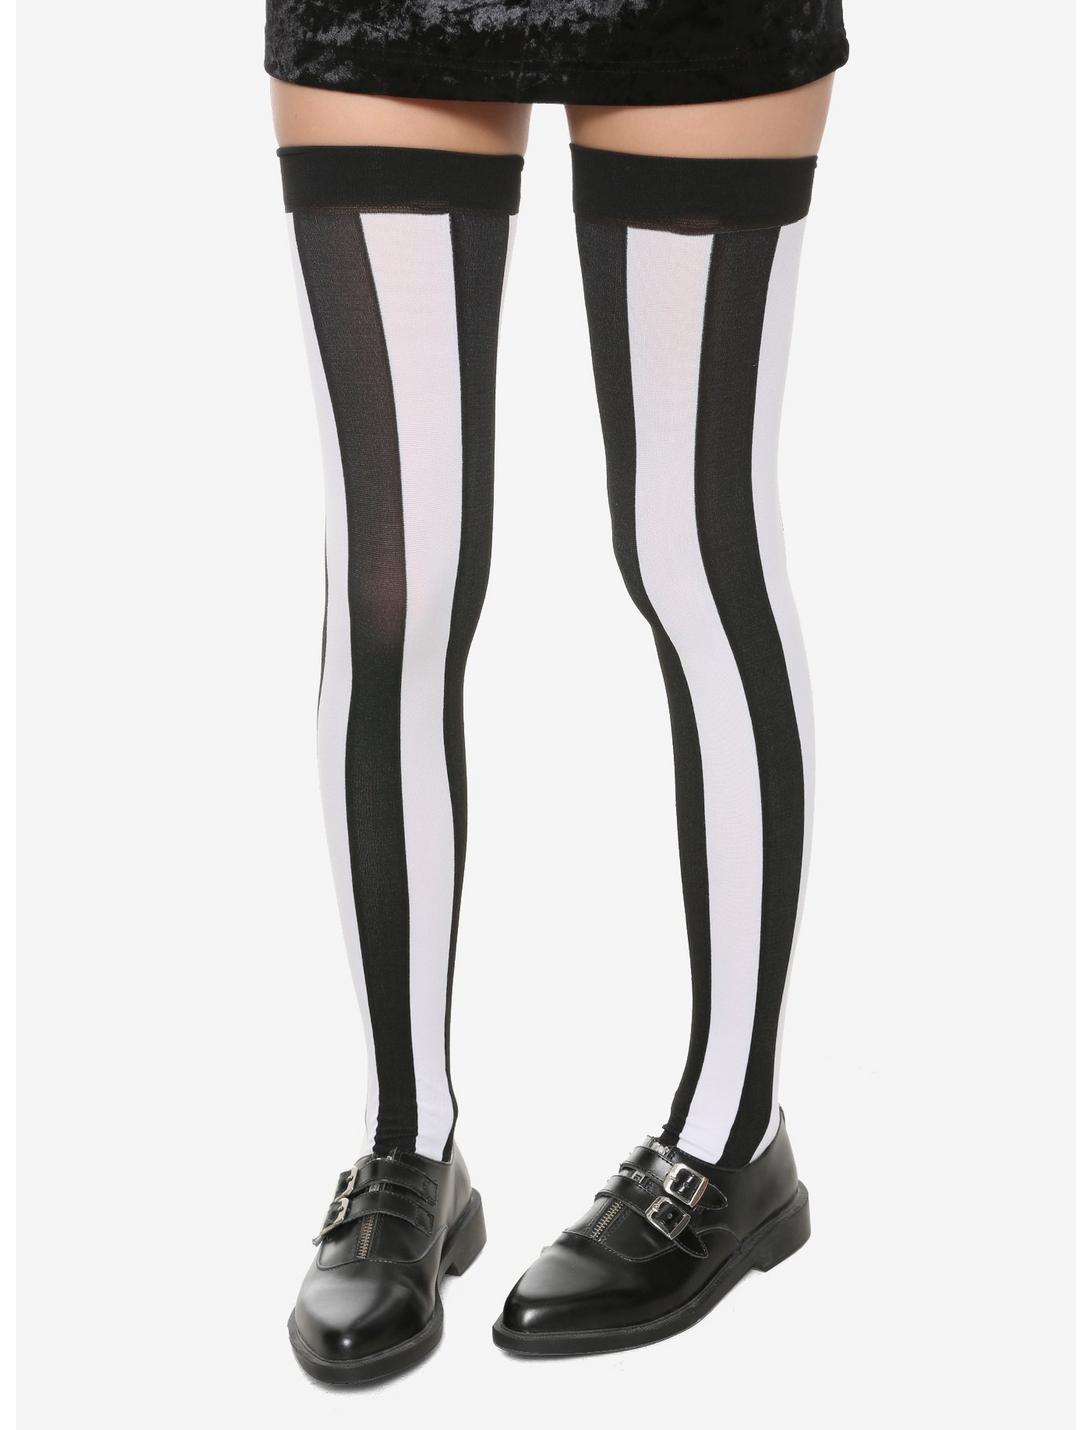 Black & White Vertical Striped Thigh Highs, , hi-res